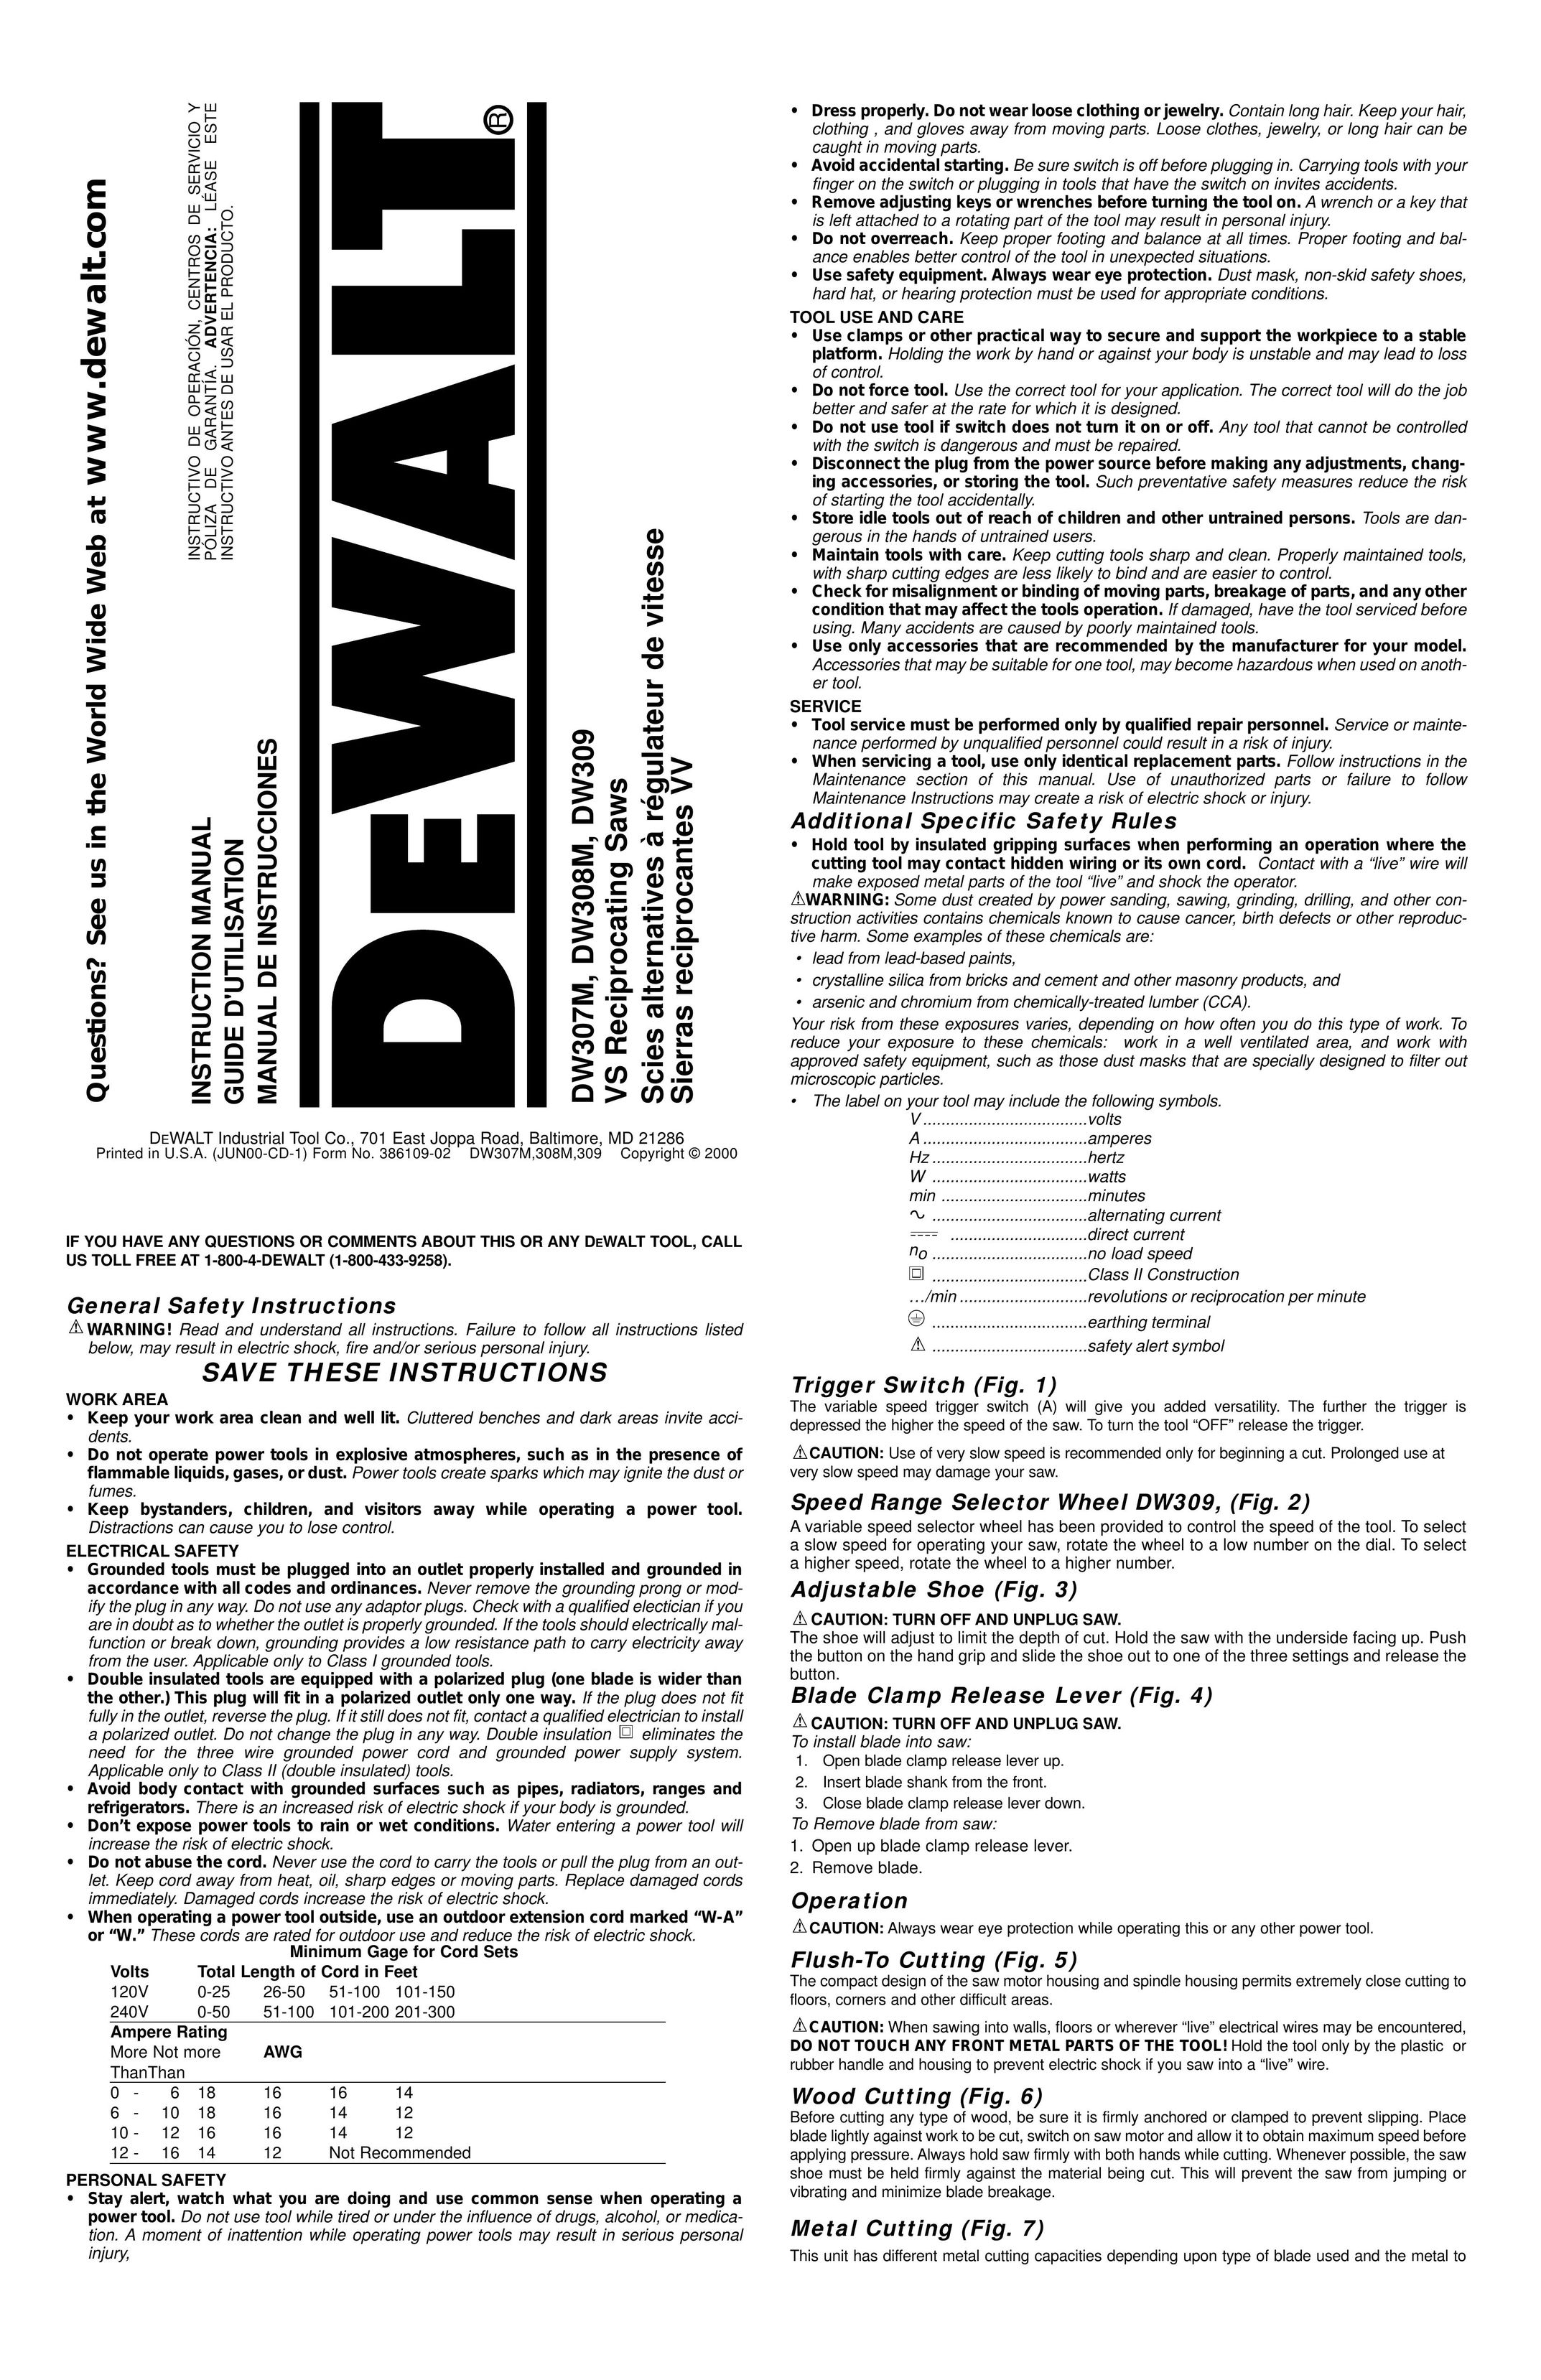 DeWalt DW309 Range User Manual